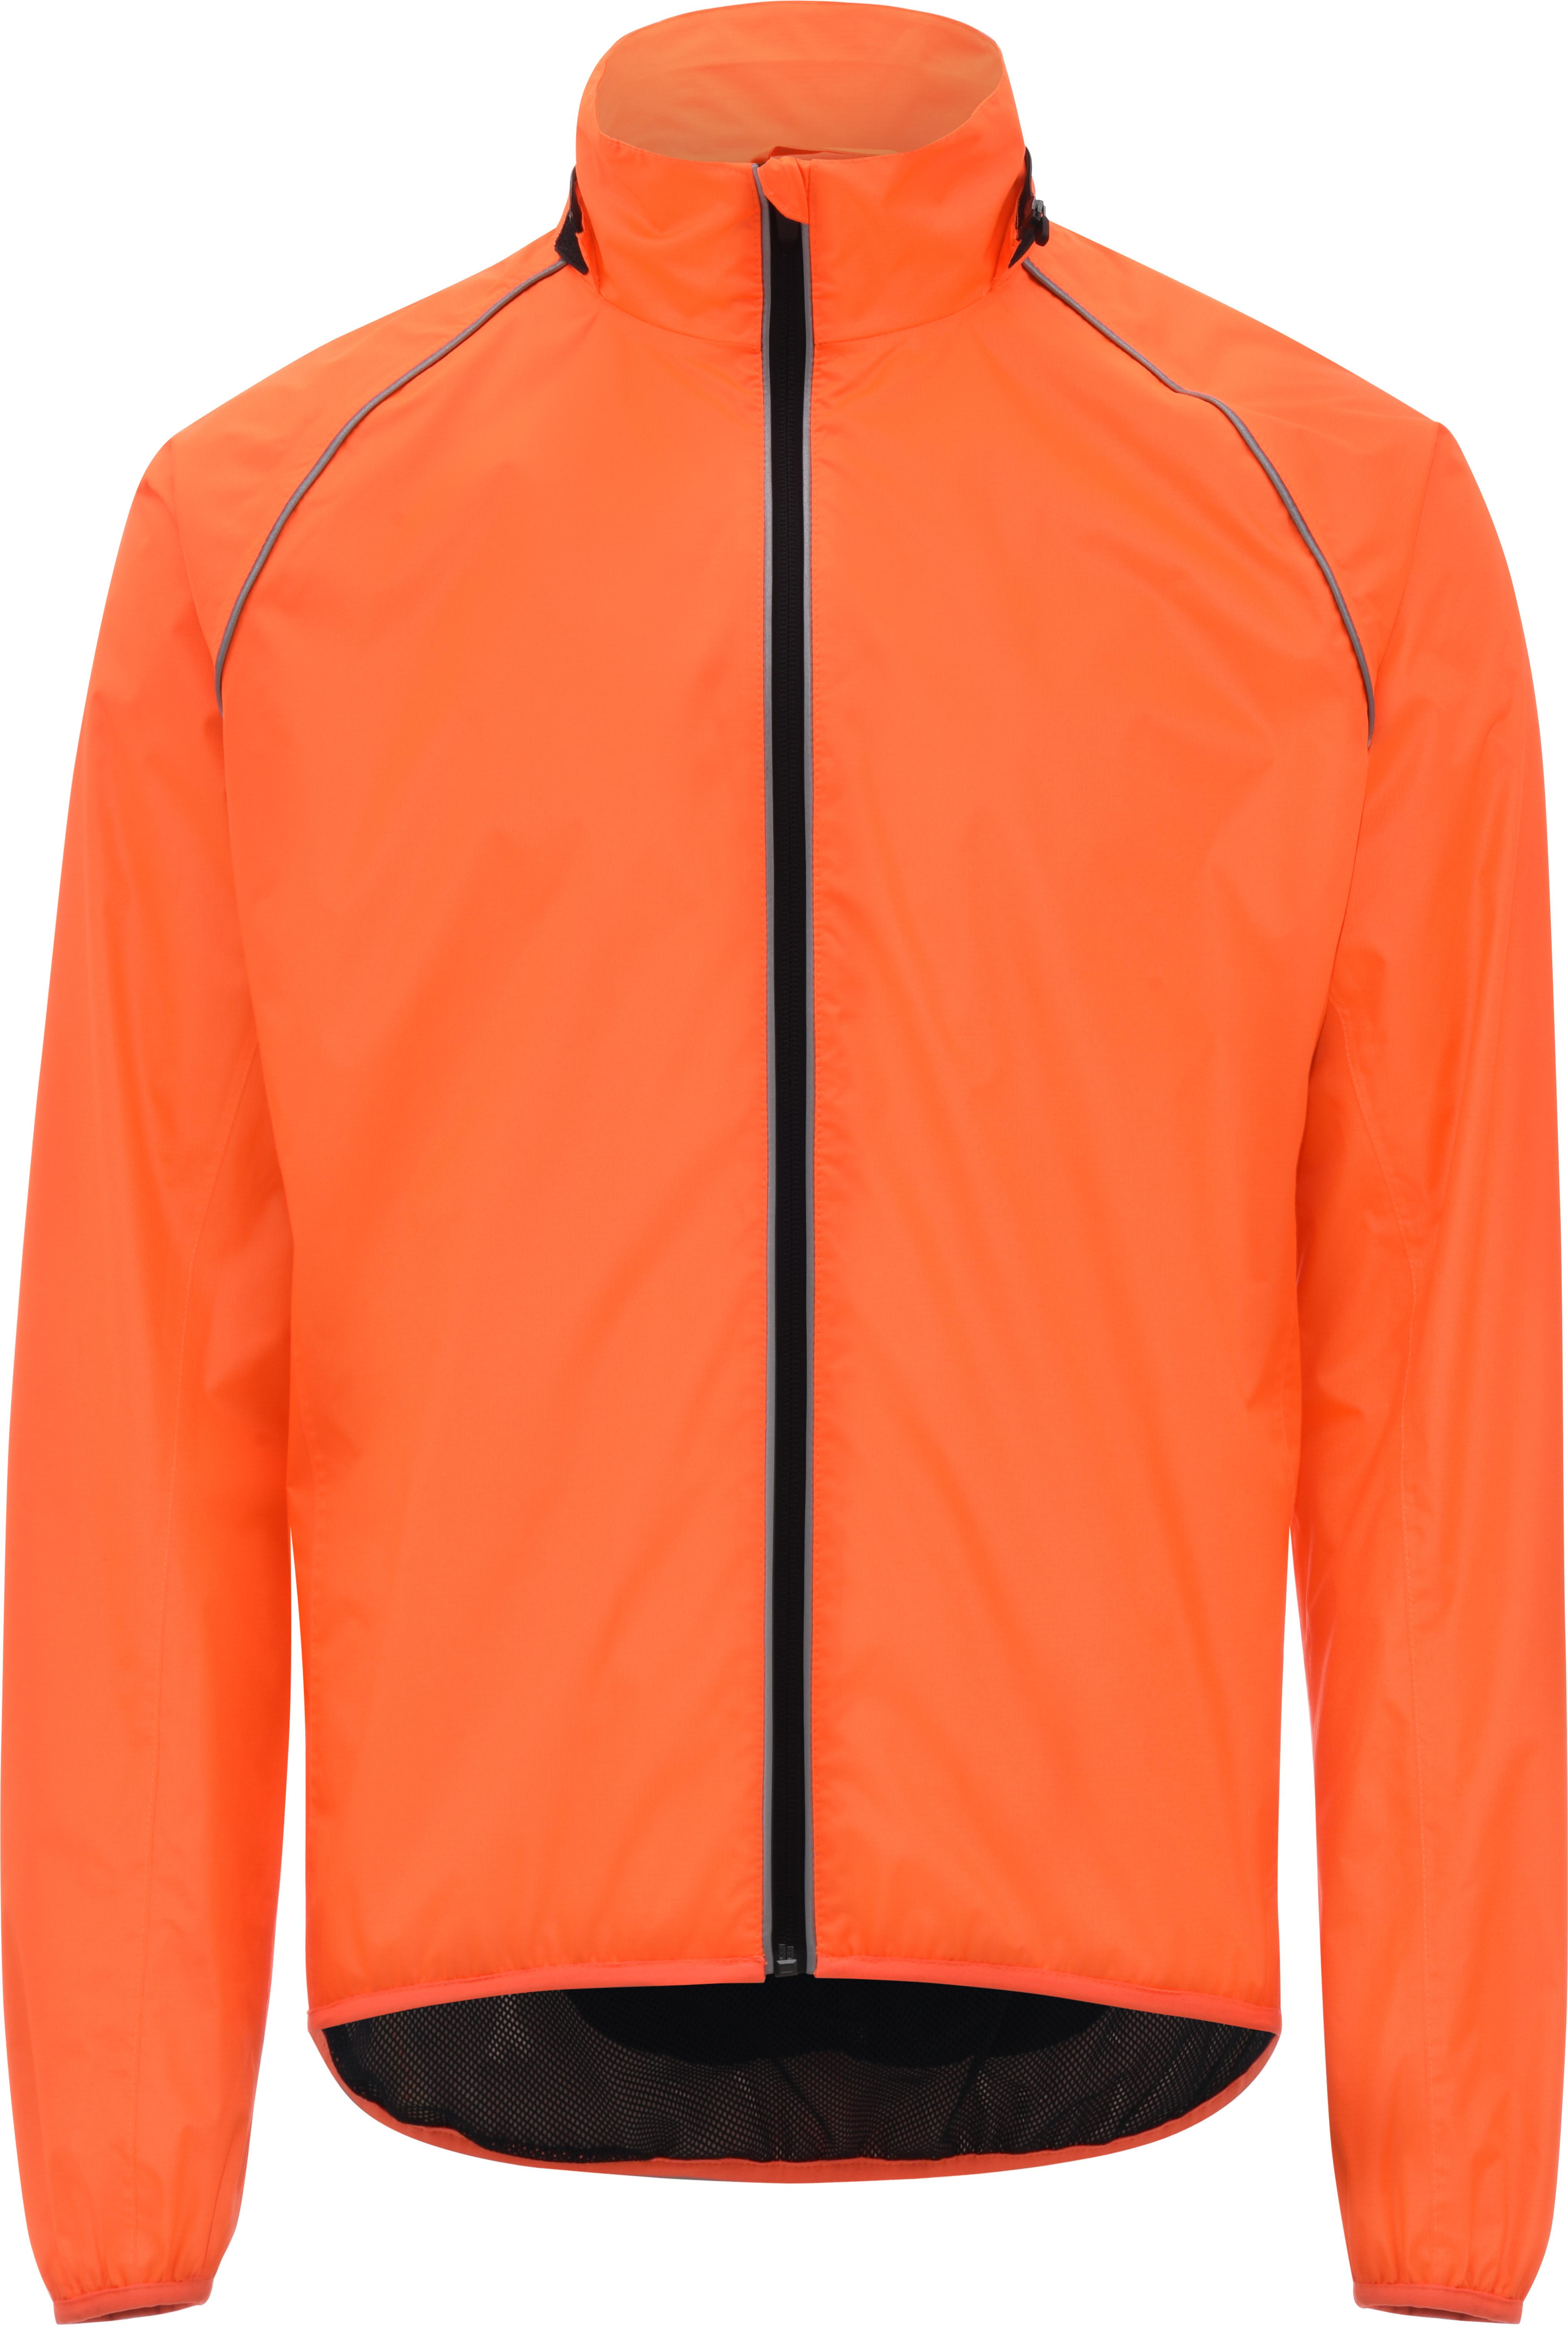 Ridge Unisex Waterproof Jacket - Fluorescent Orange, M